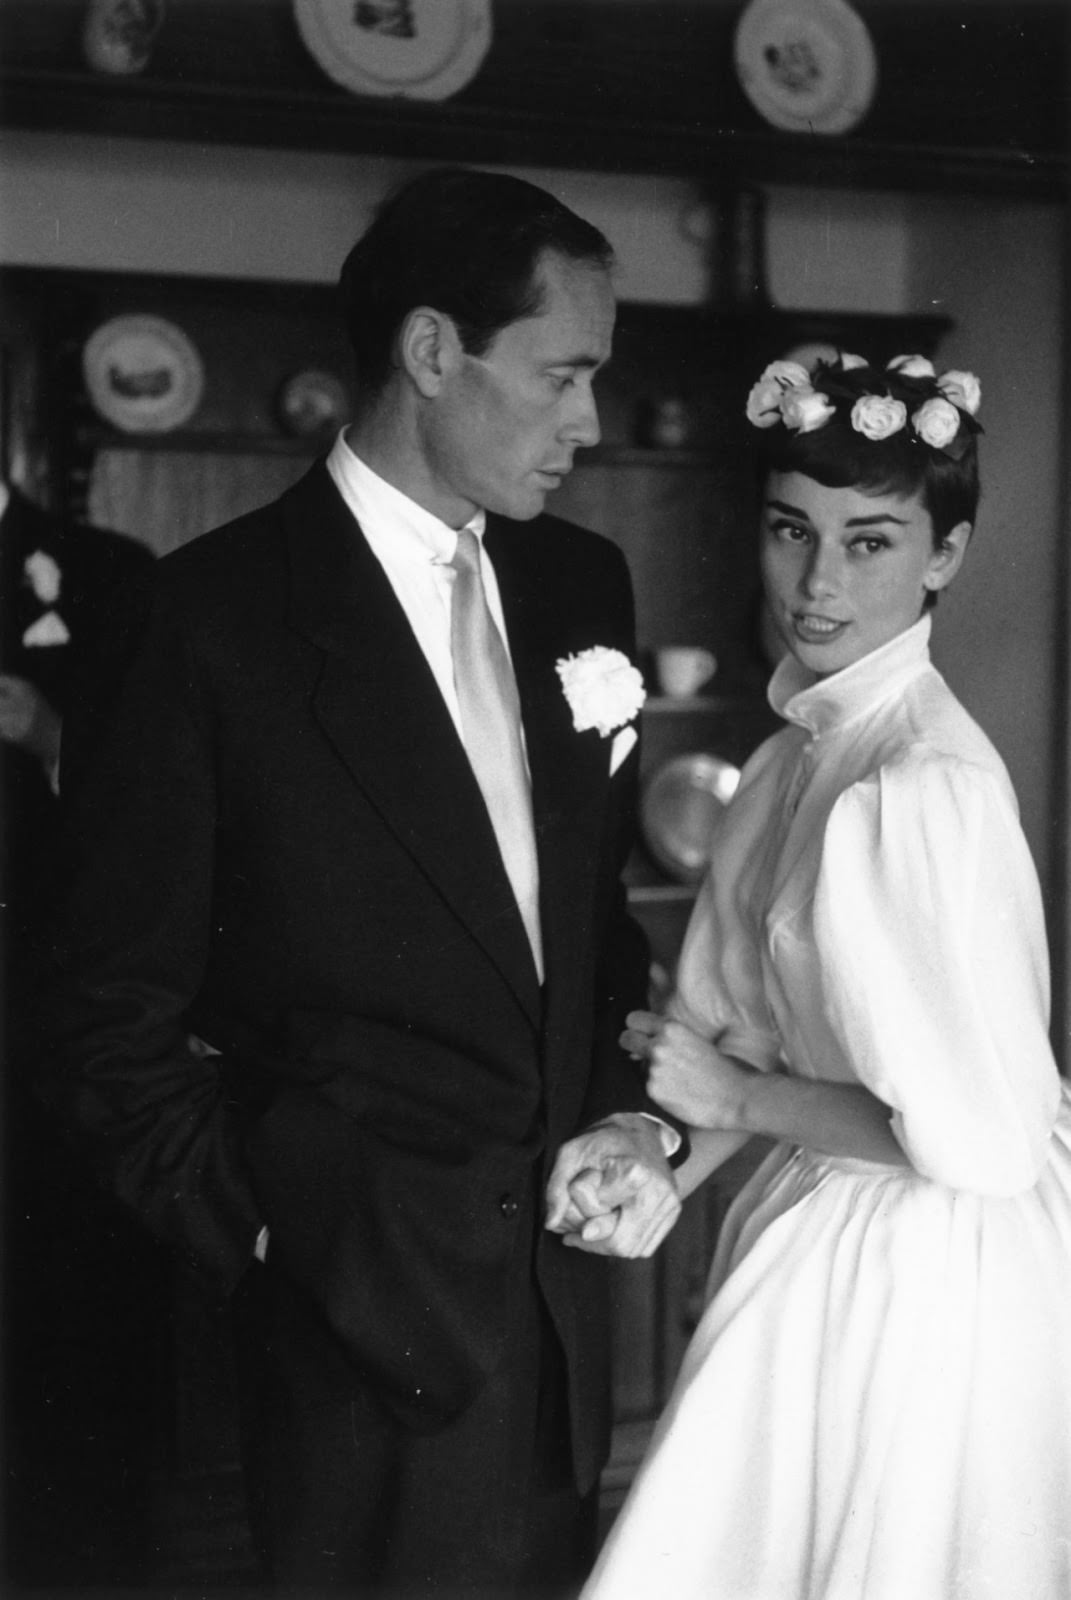 Audrey Hepburn and Mel Ferrer on Their Wedding Day and Honeymoon in Bürgenstock, Switzerland, 1954